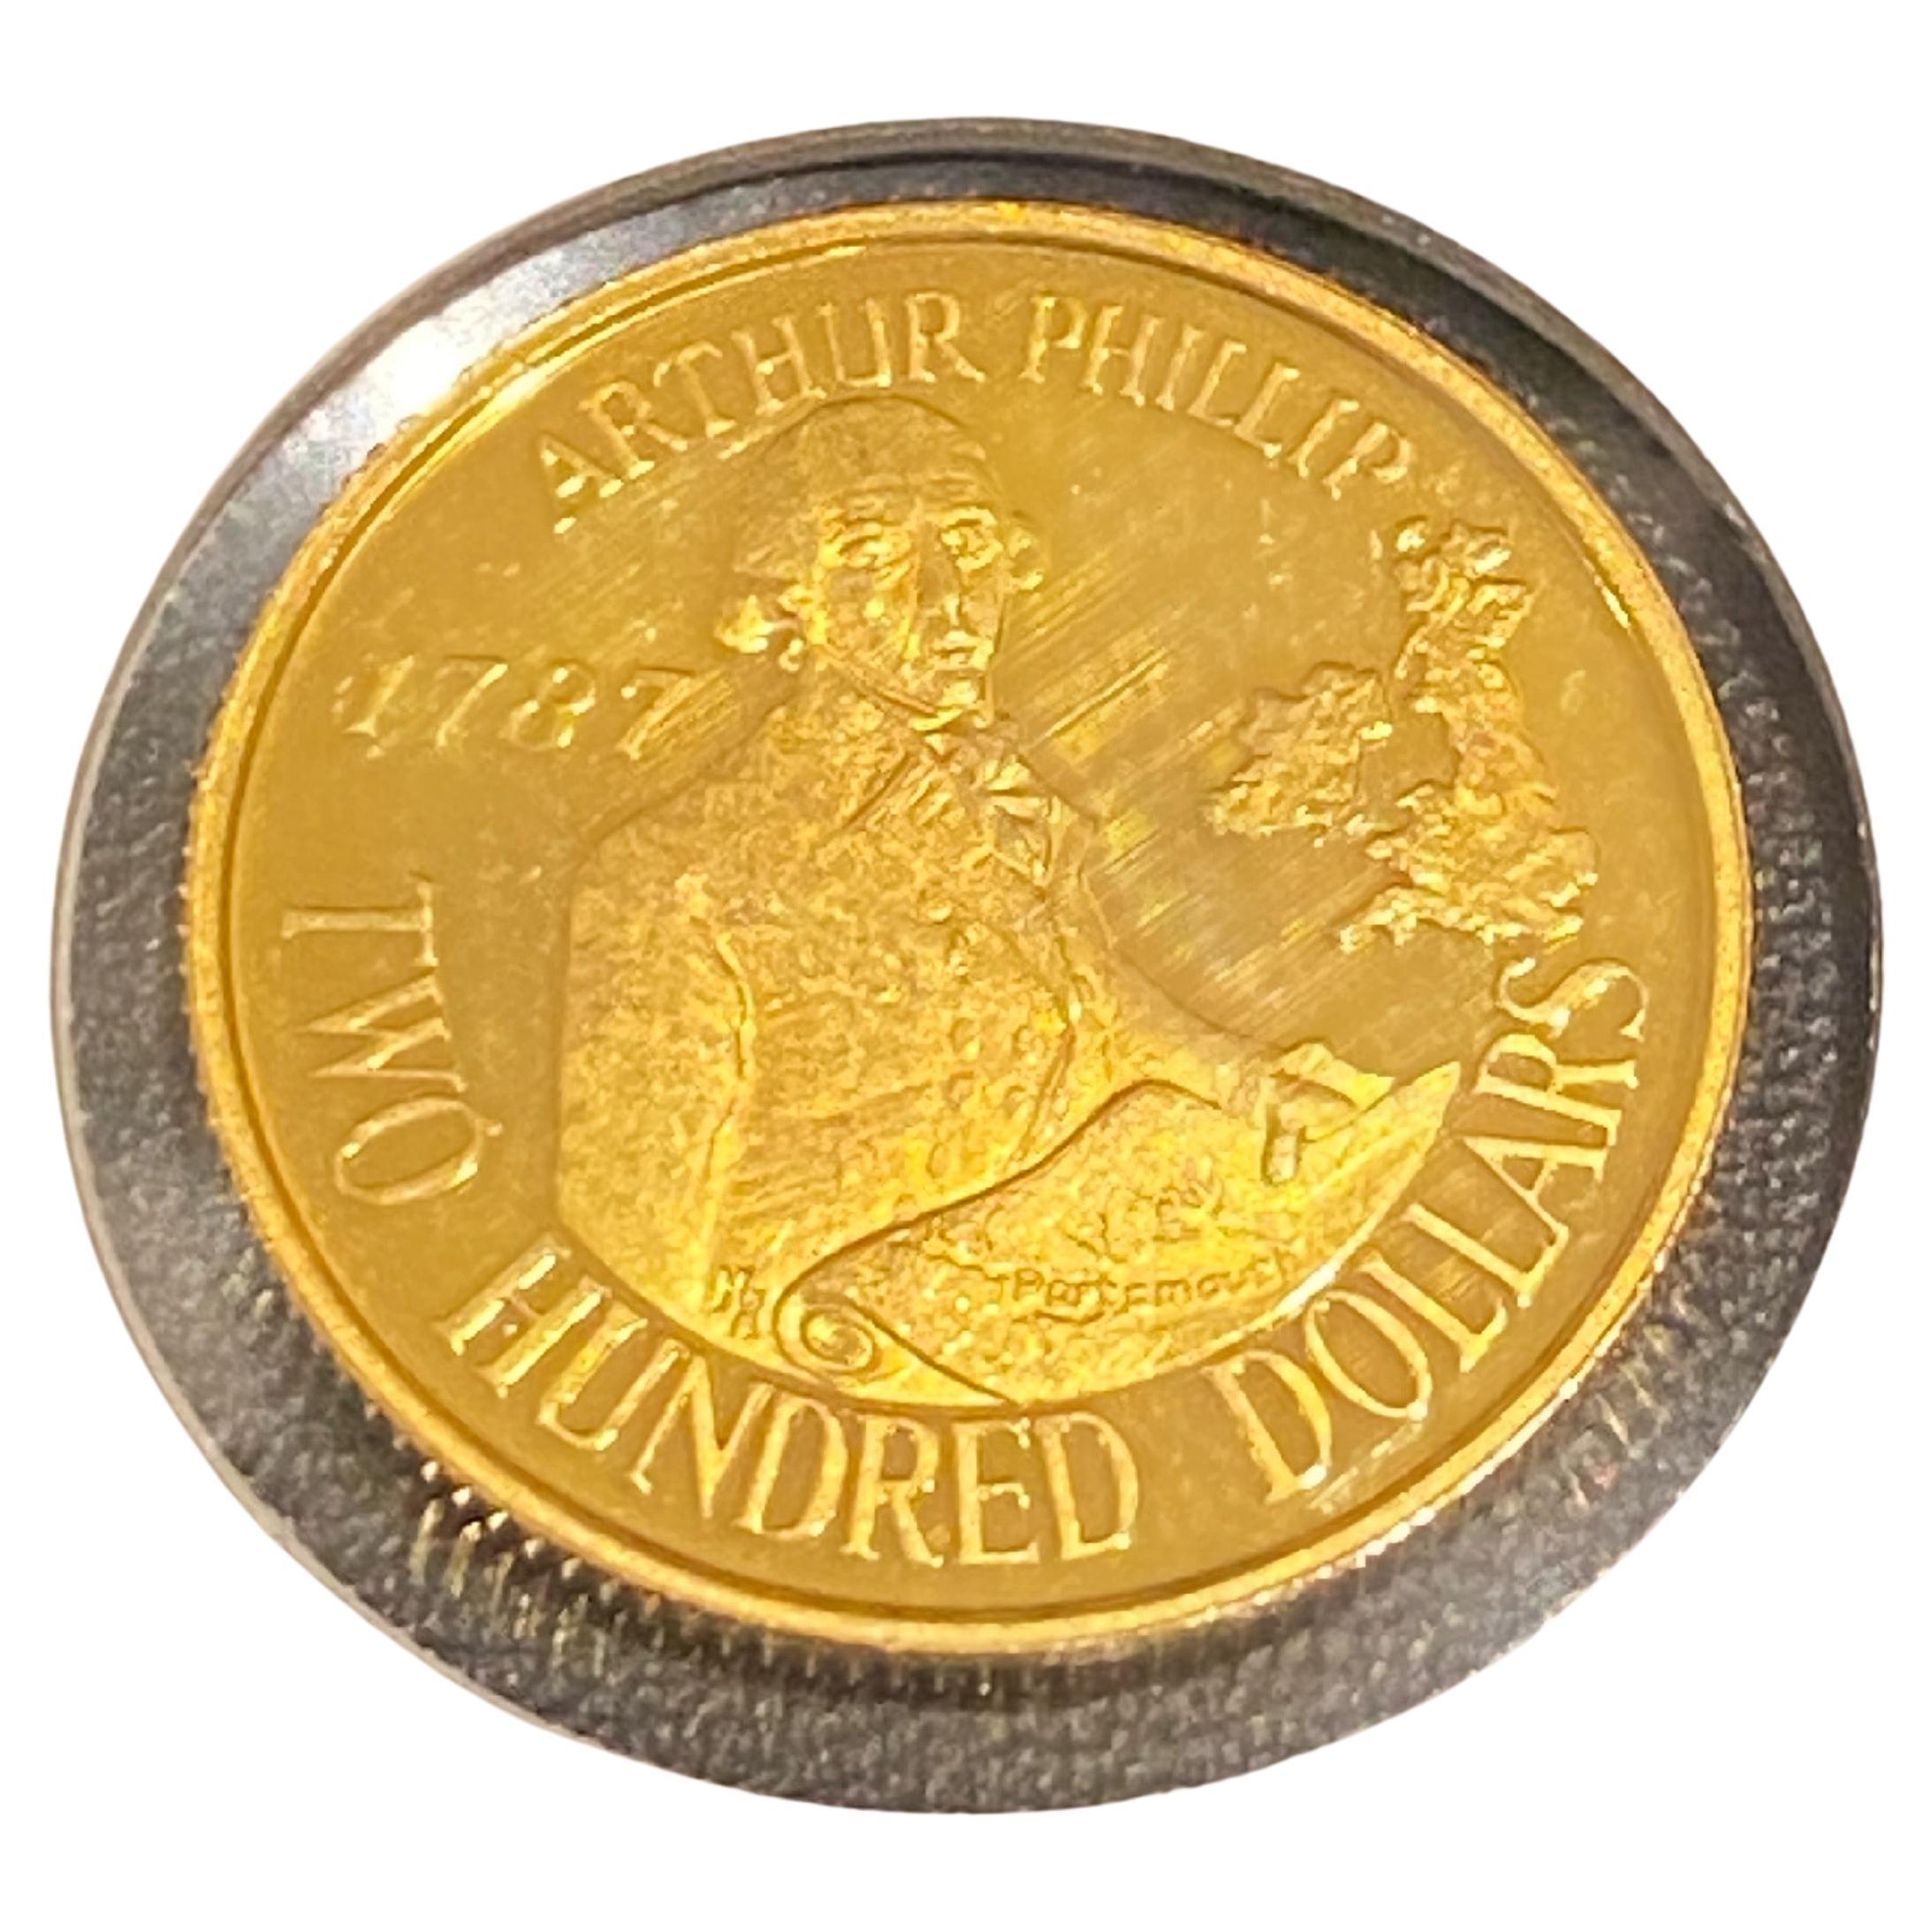 c1987 22K Gold Australian Embarkation Arthur Phillip $200 Uncirculated Coin.